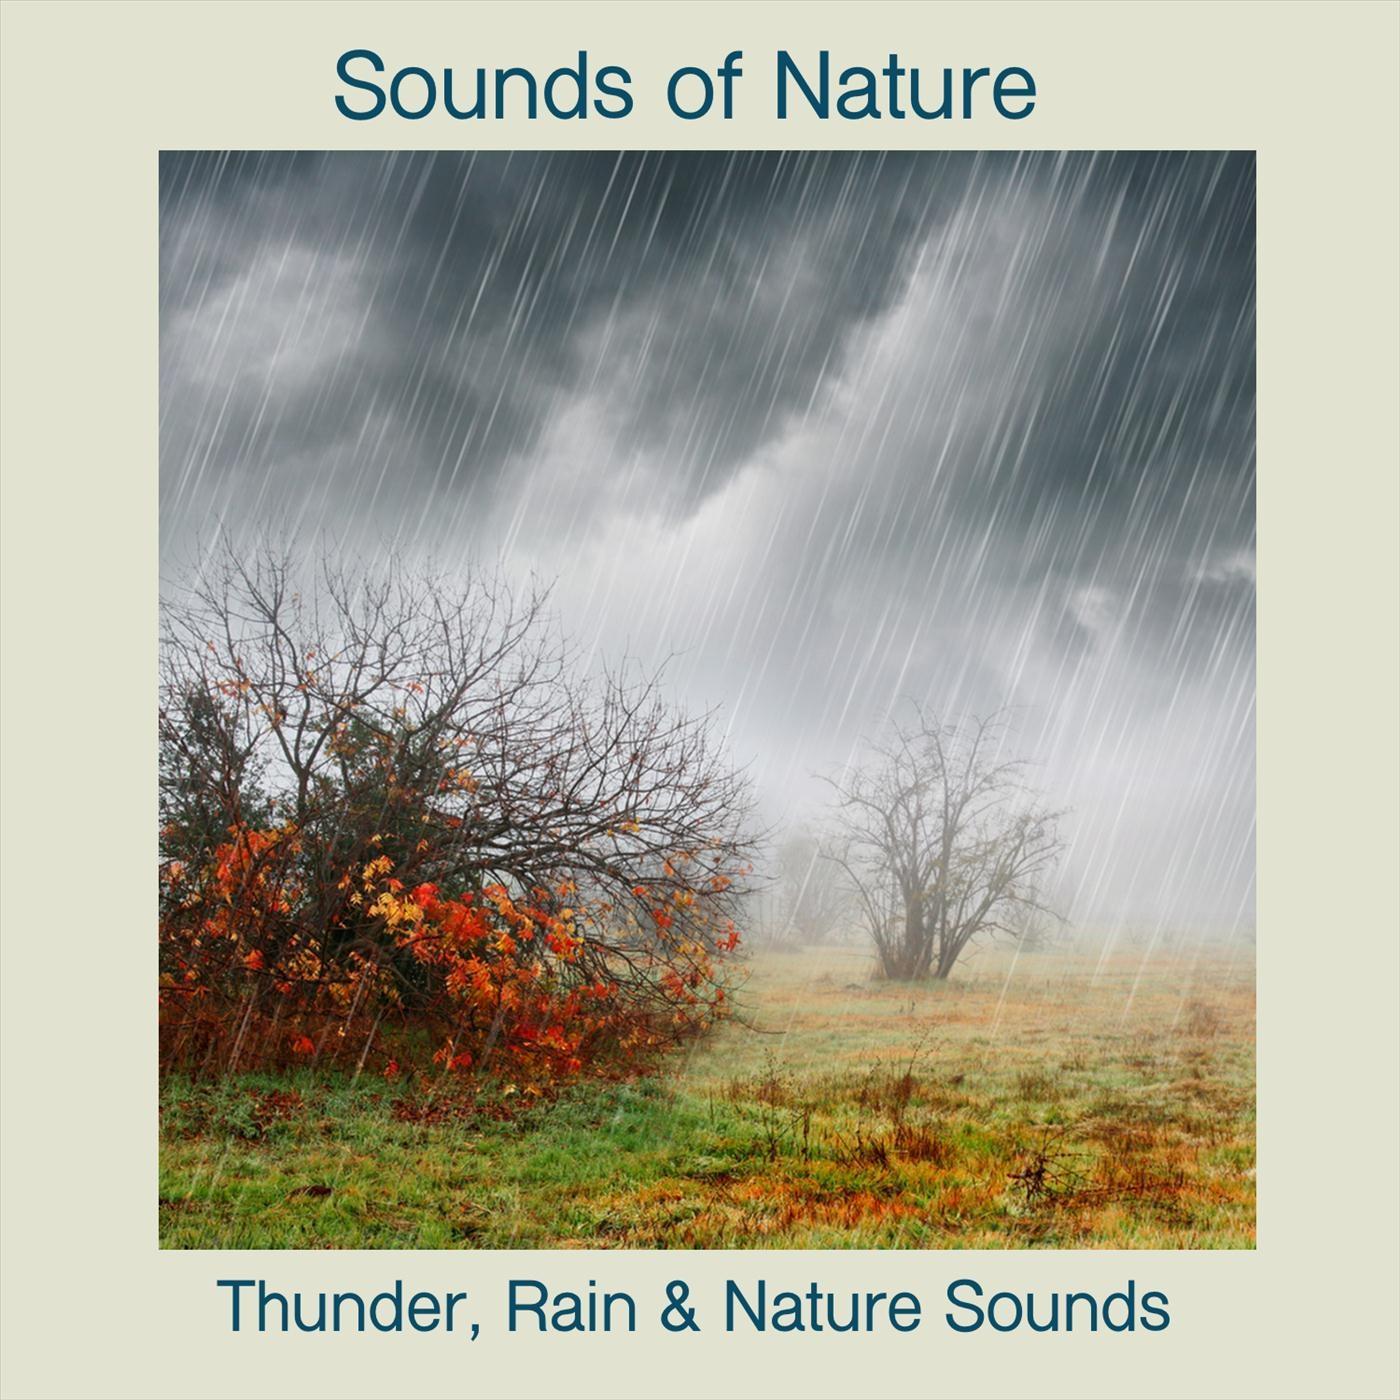 Rain, Thunder and Nature Sounds